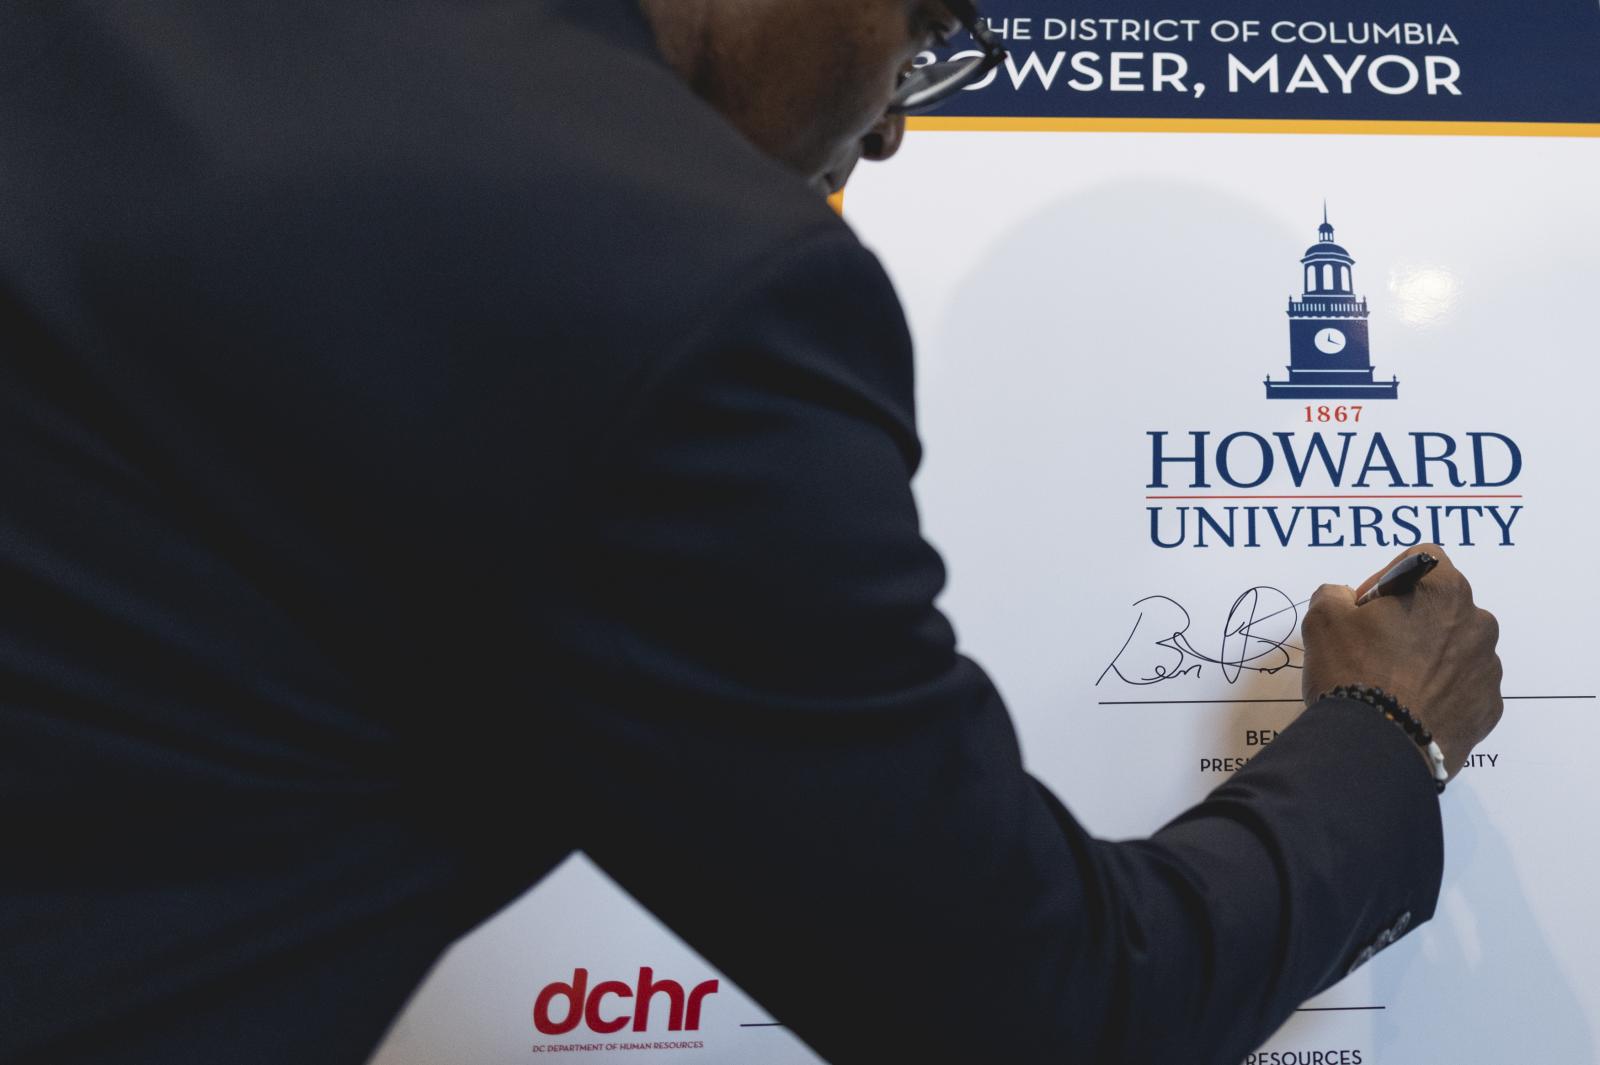 President Vinson signing Mayor Bowser's HBCU Public Service Program board